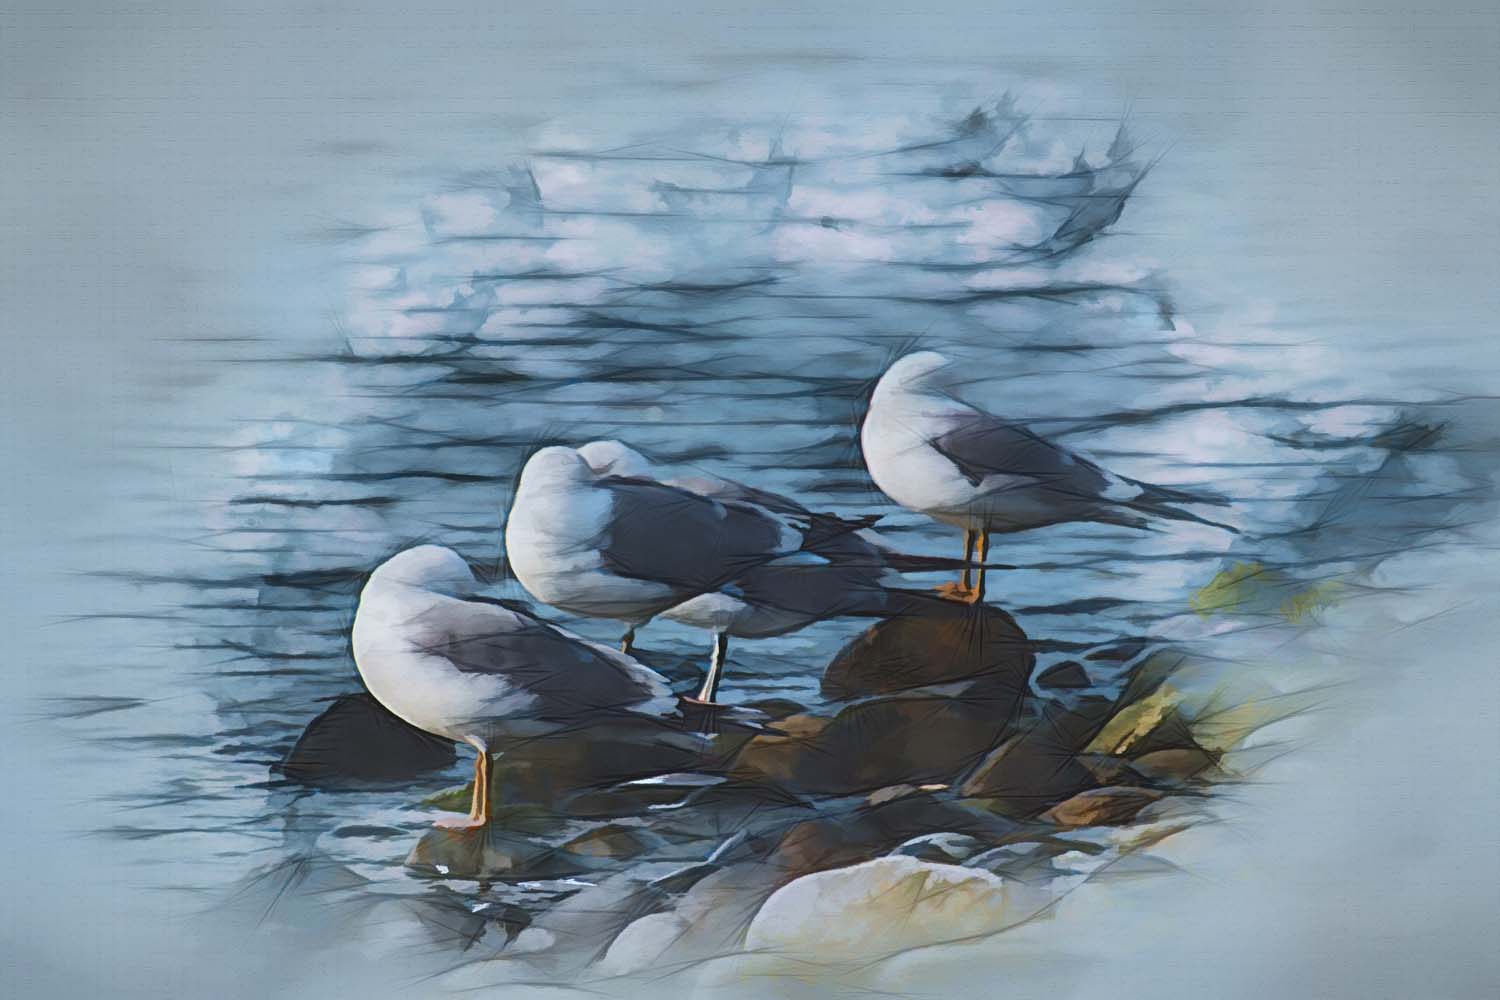 abstract preening seagulls at water's edge